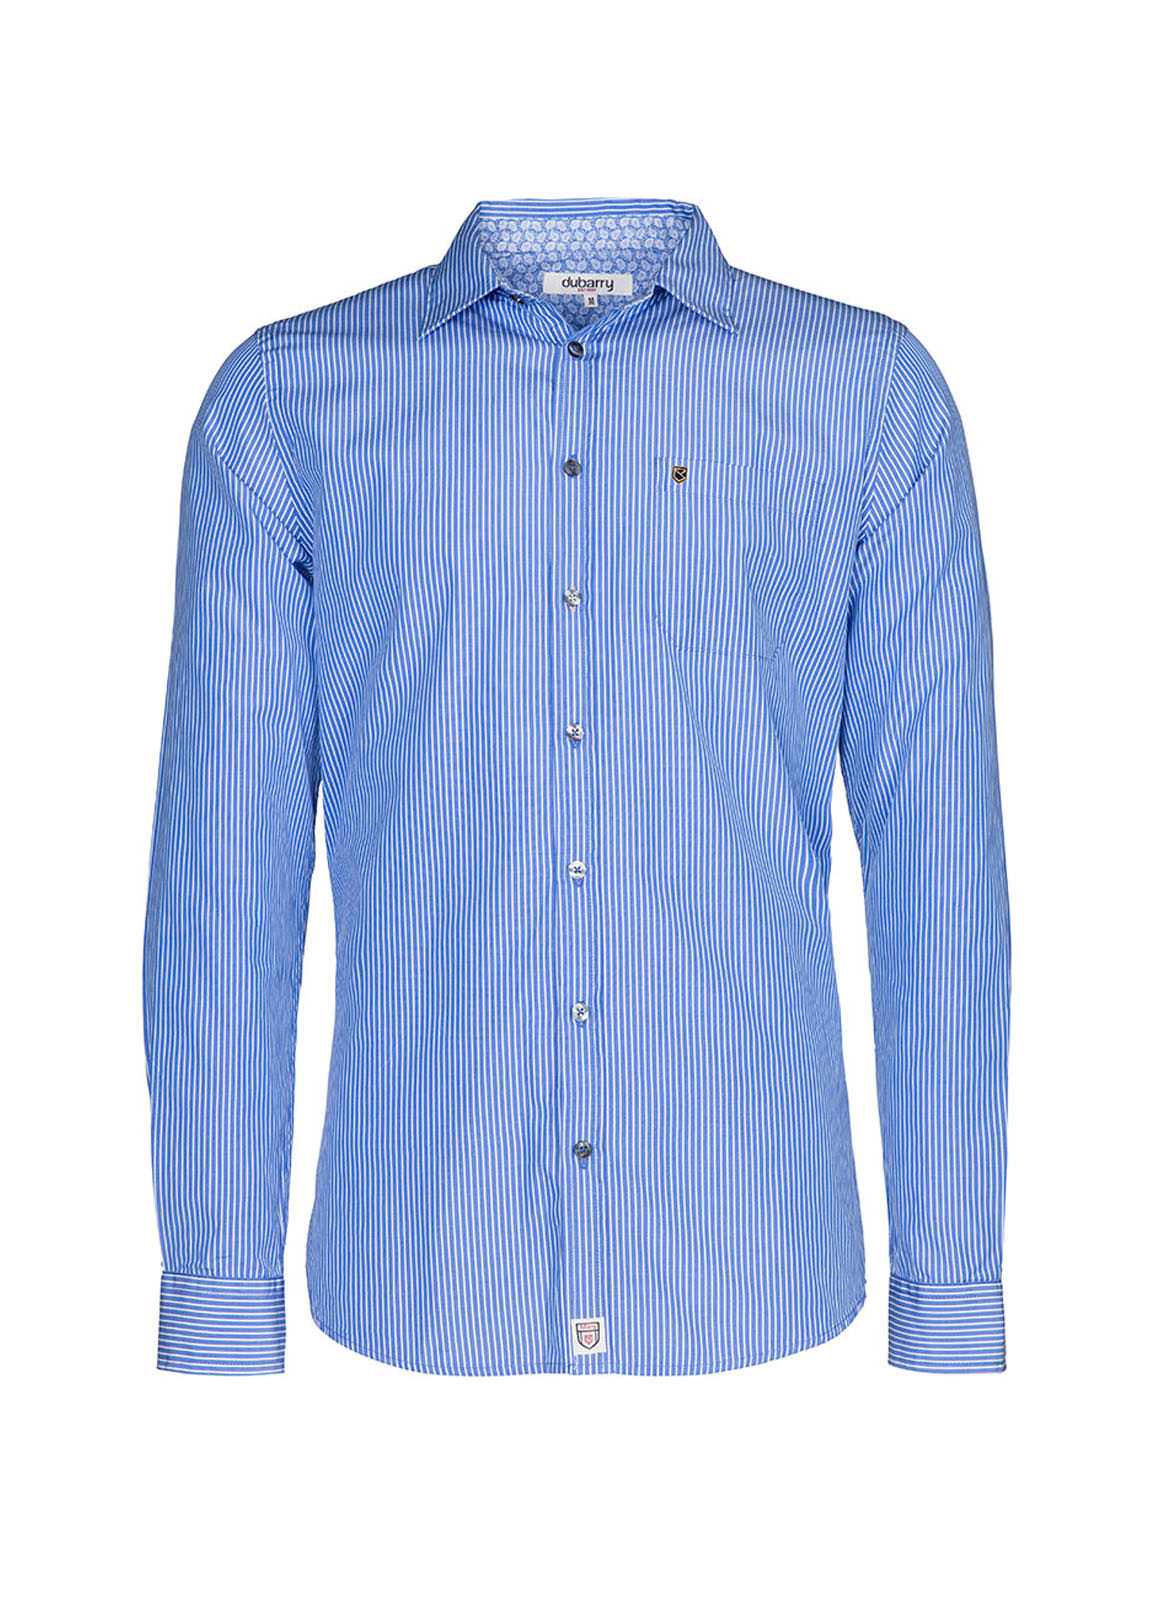 Dubarry_ Castlegar Shirt - Blue_Image_2